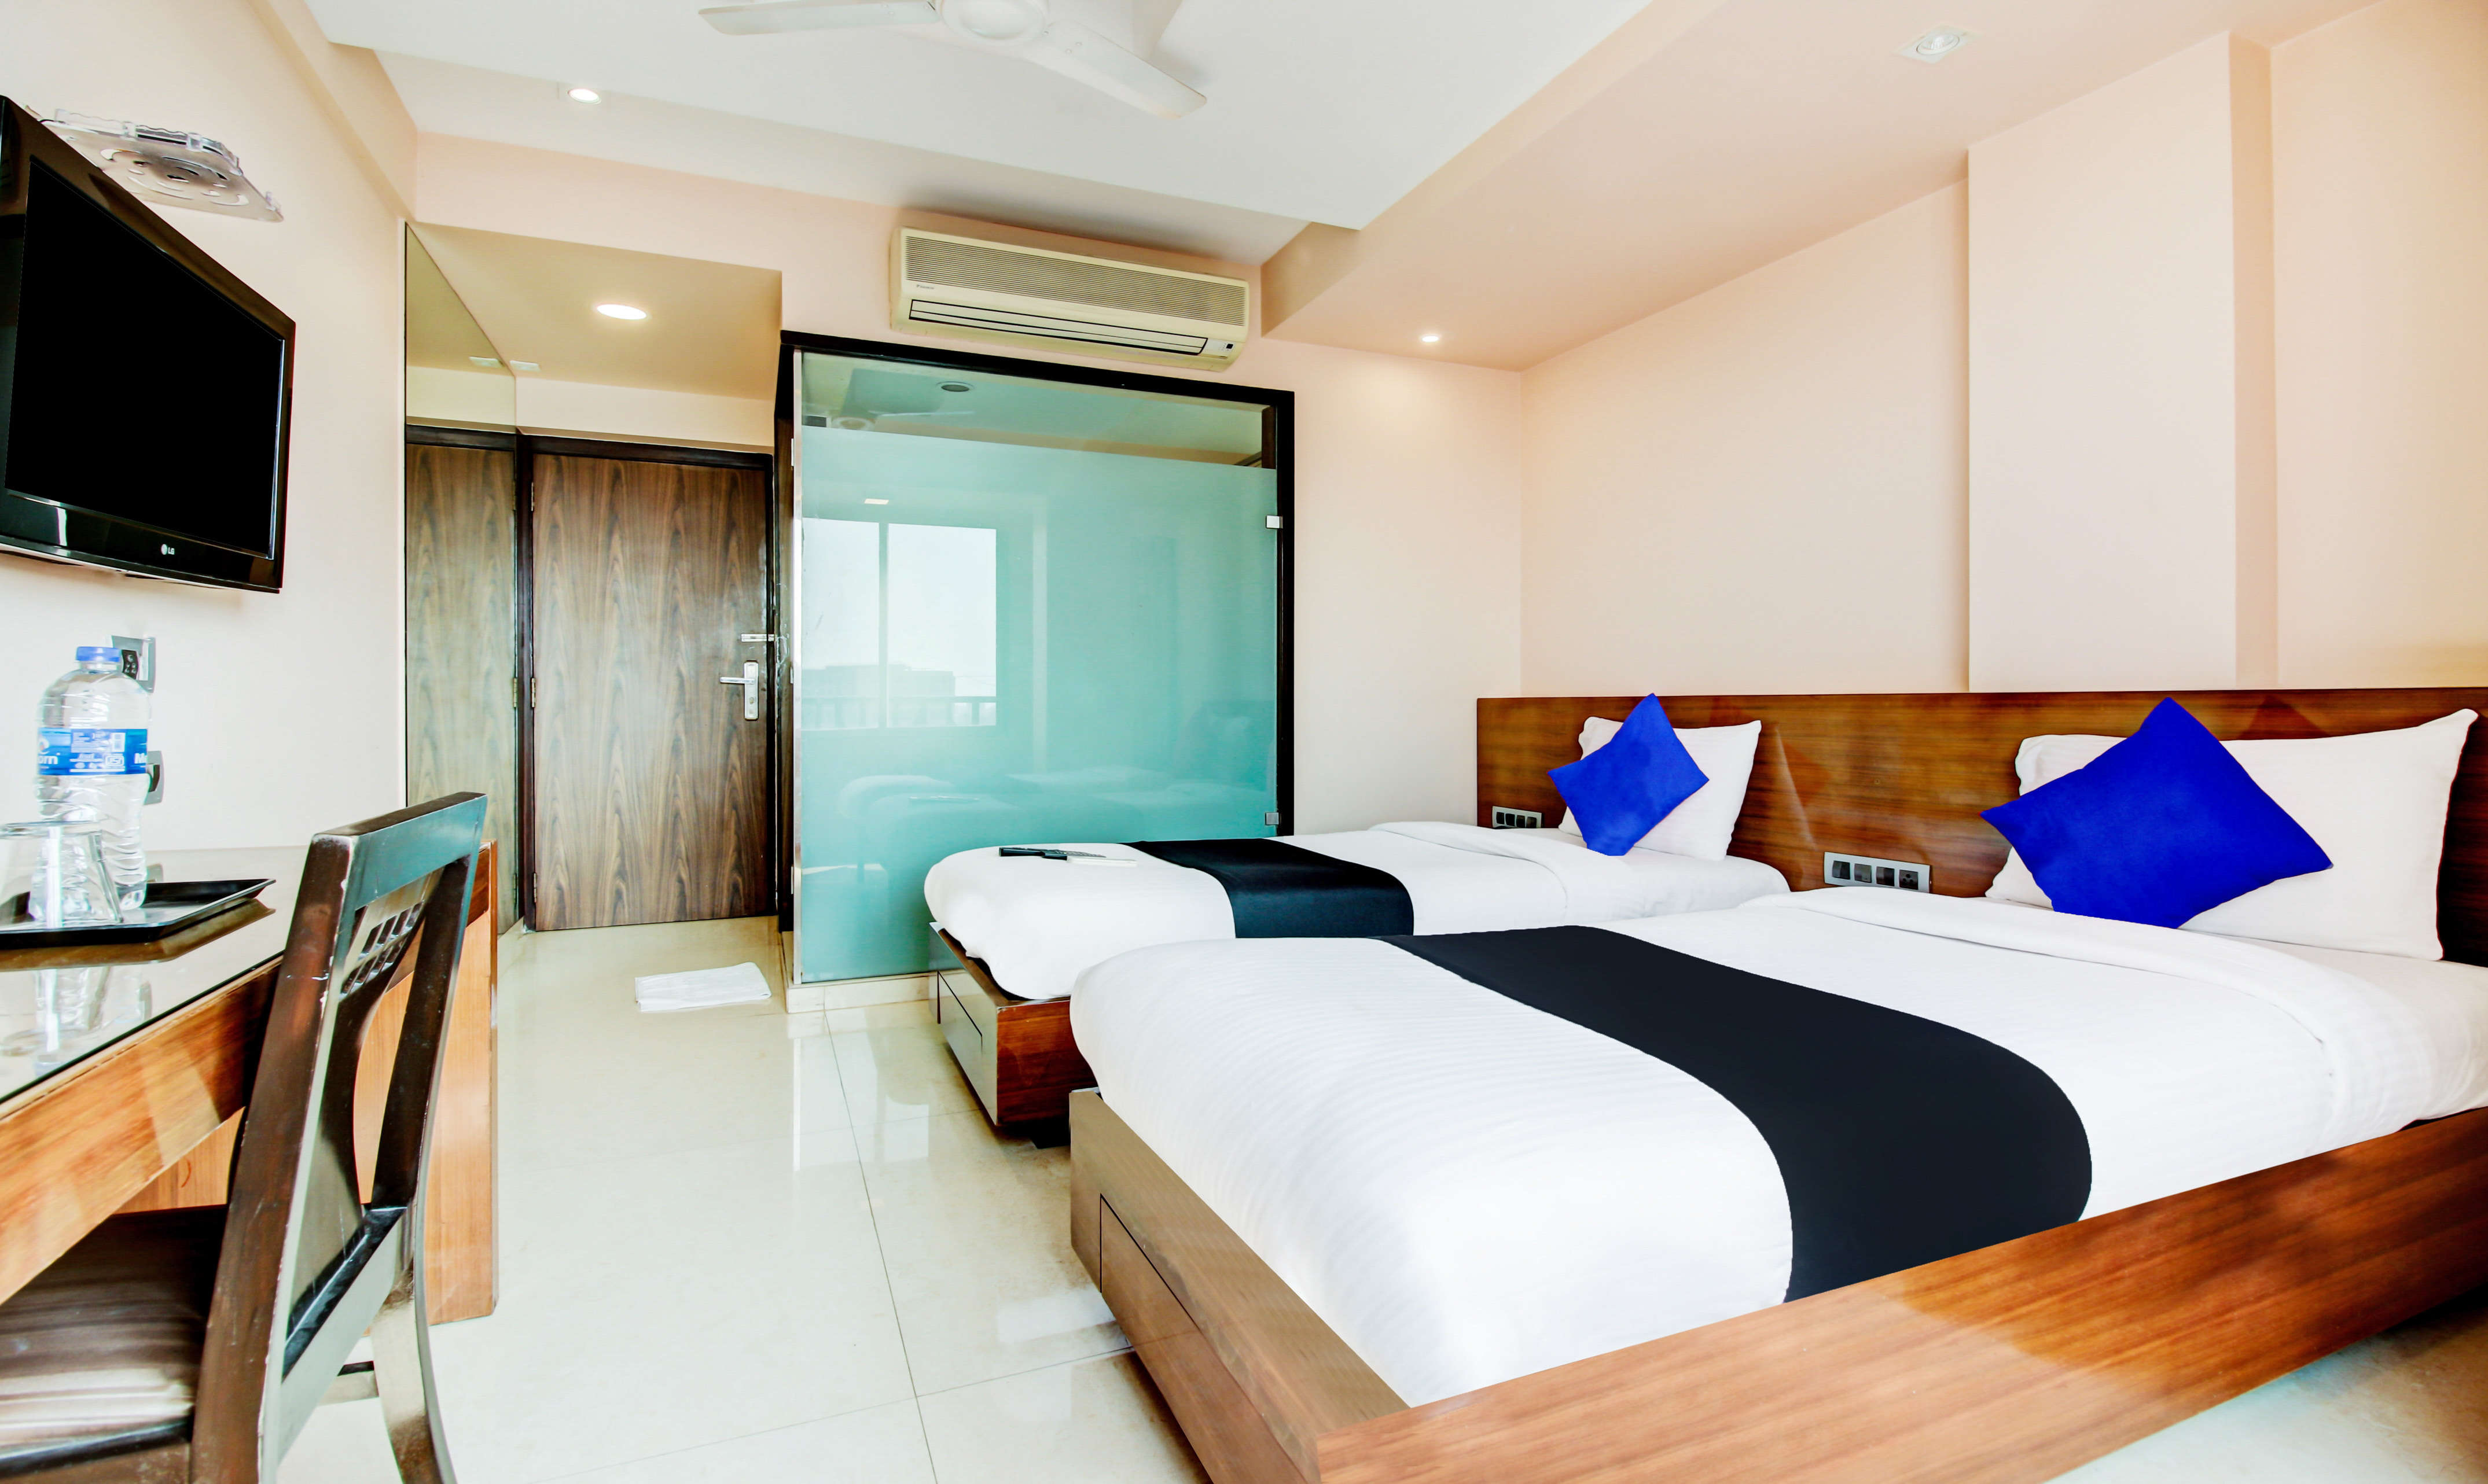 value investing course mumbai hotels